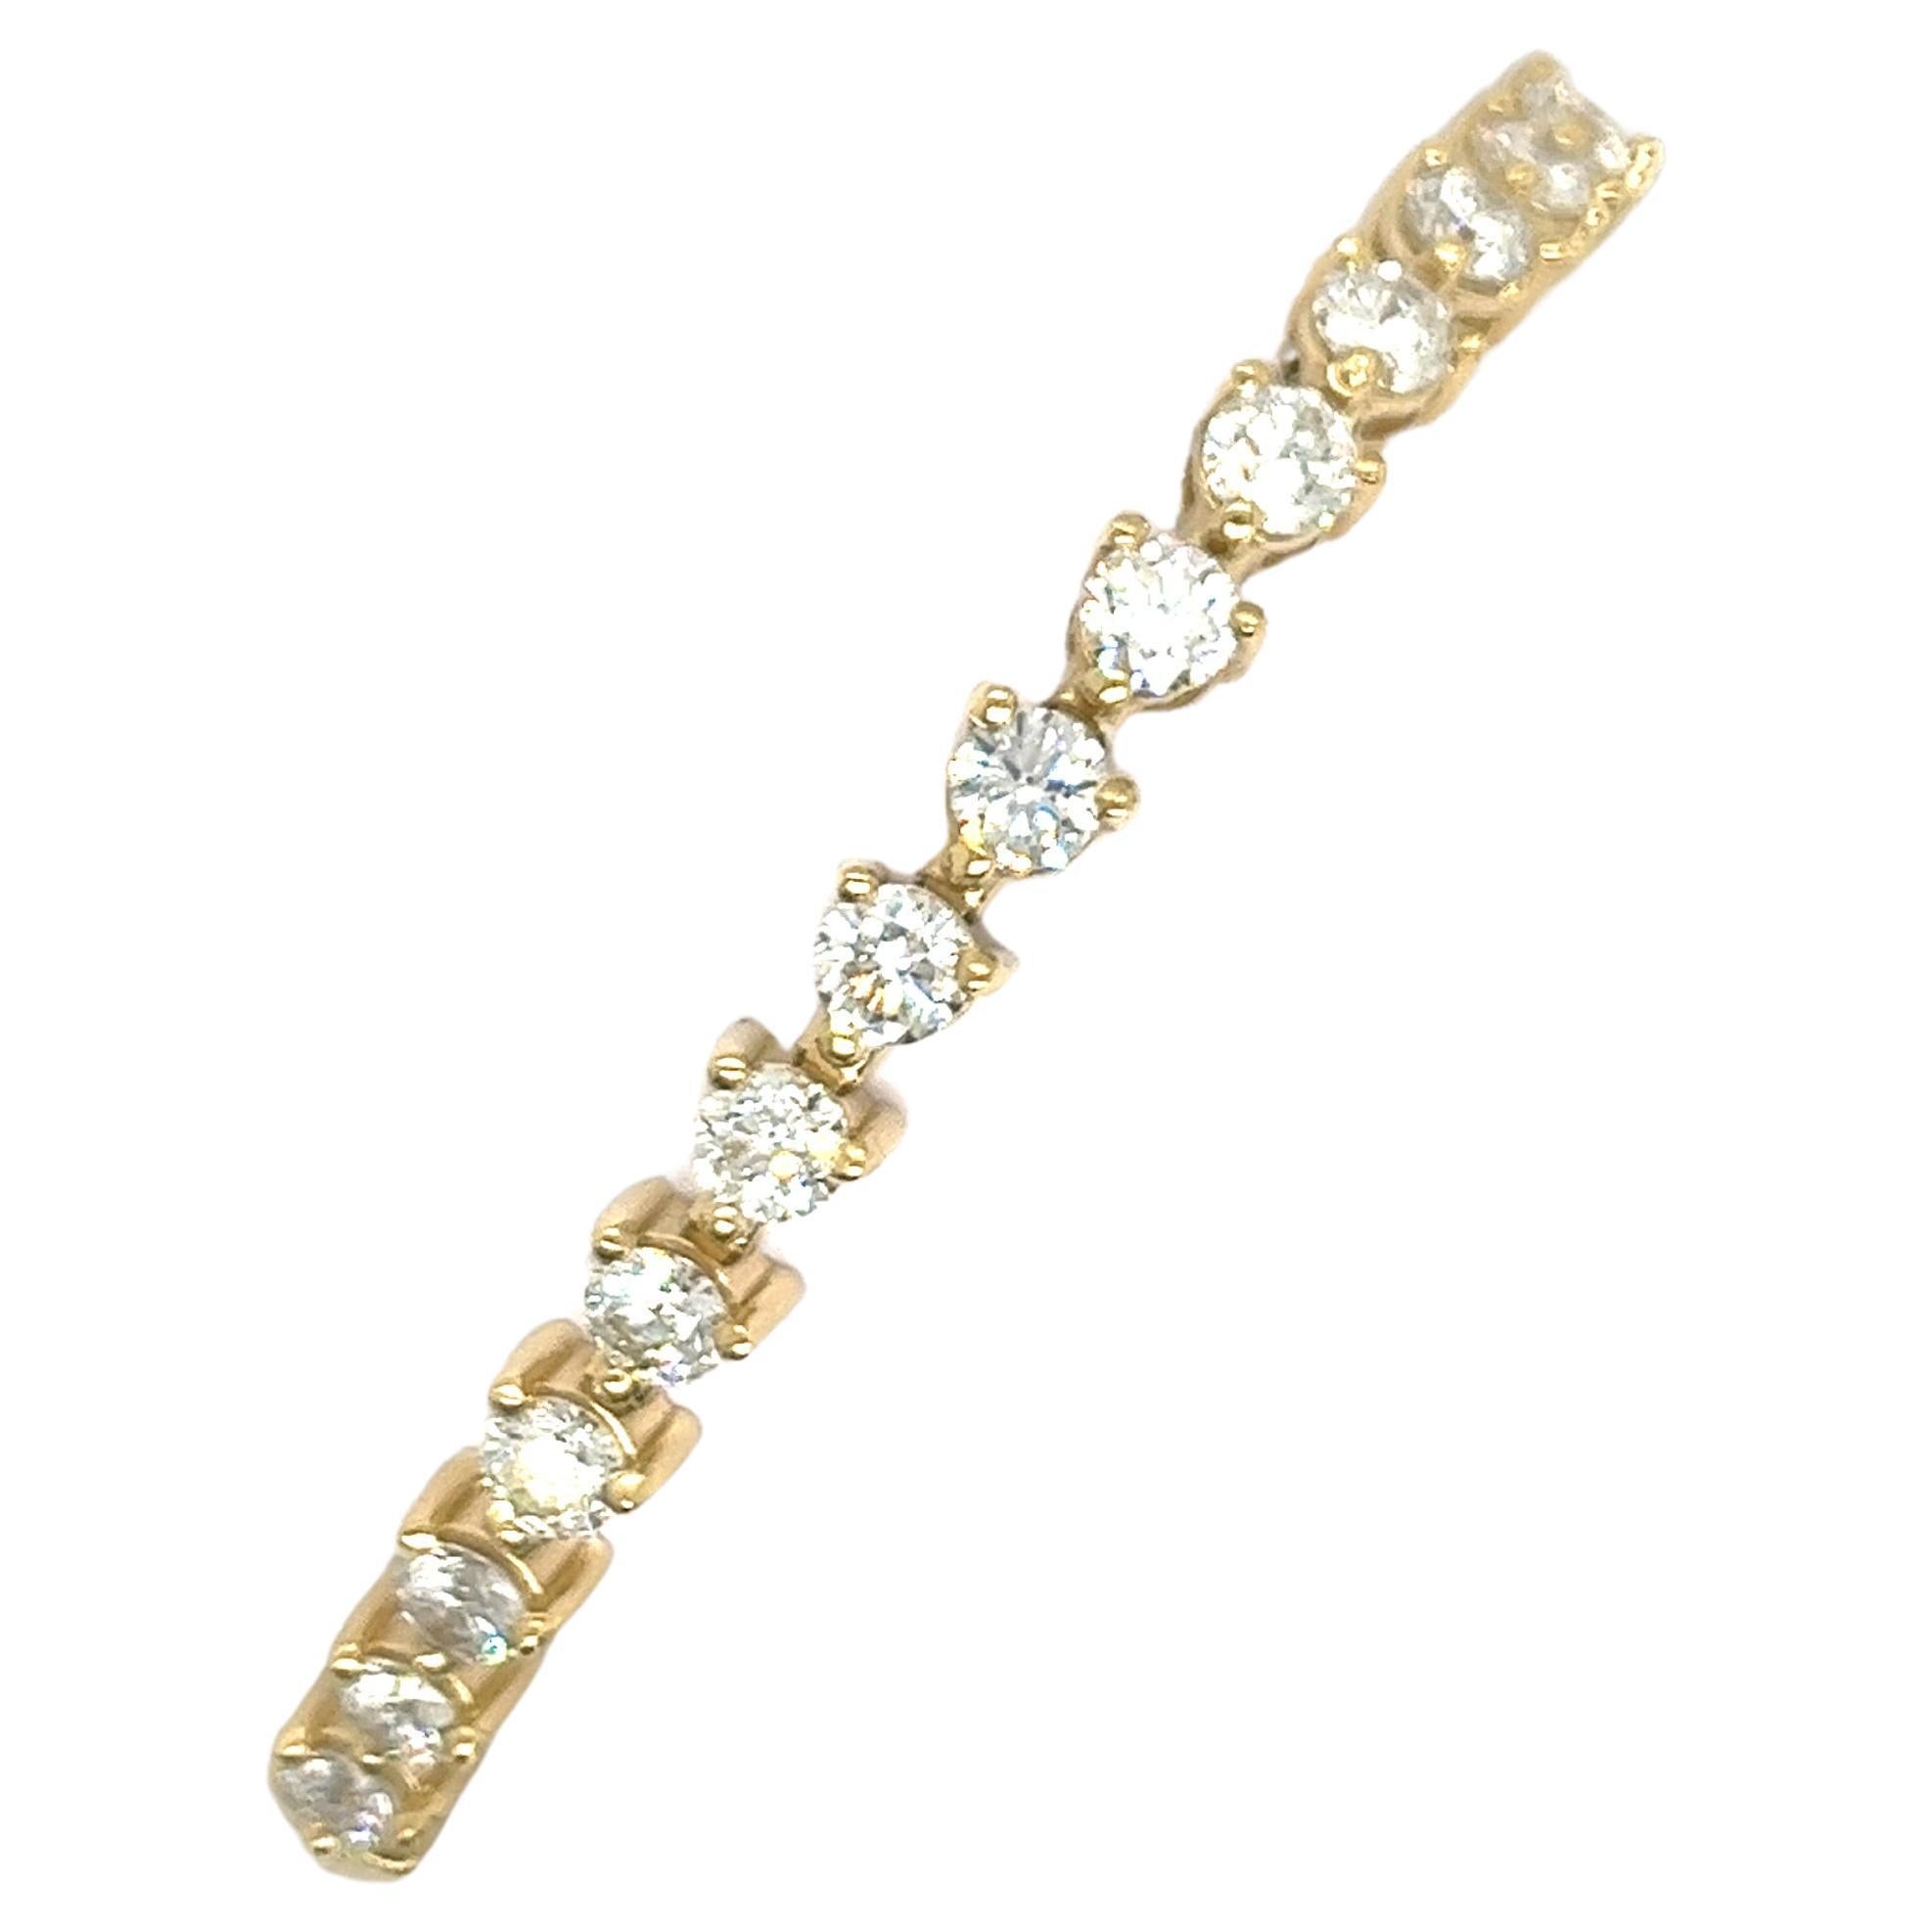 Bracelet en or jaune 18 carats, serti de diamants ronds de 2,25 carats